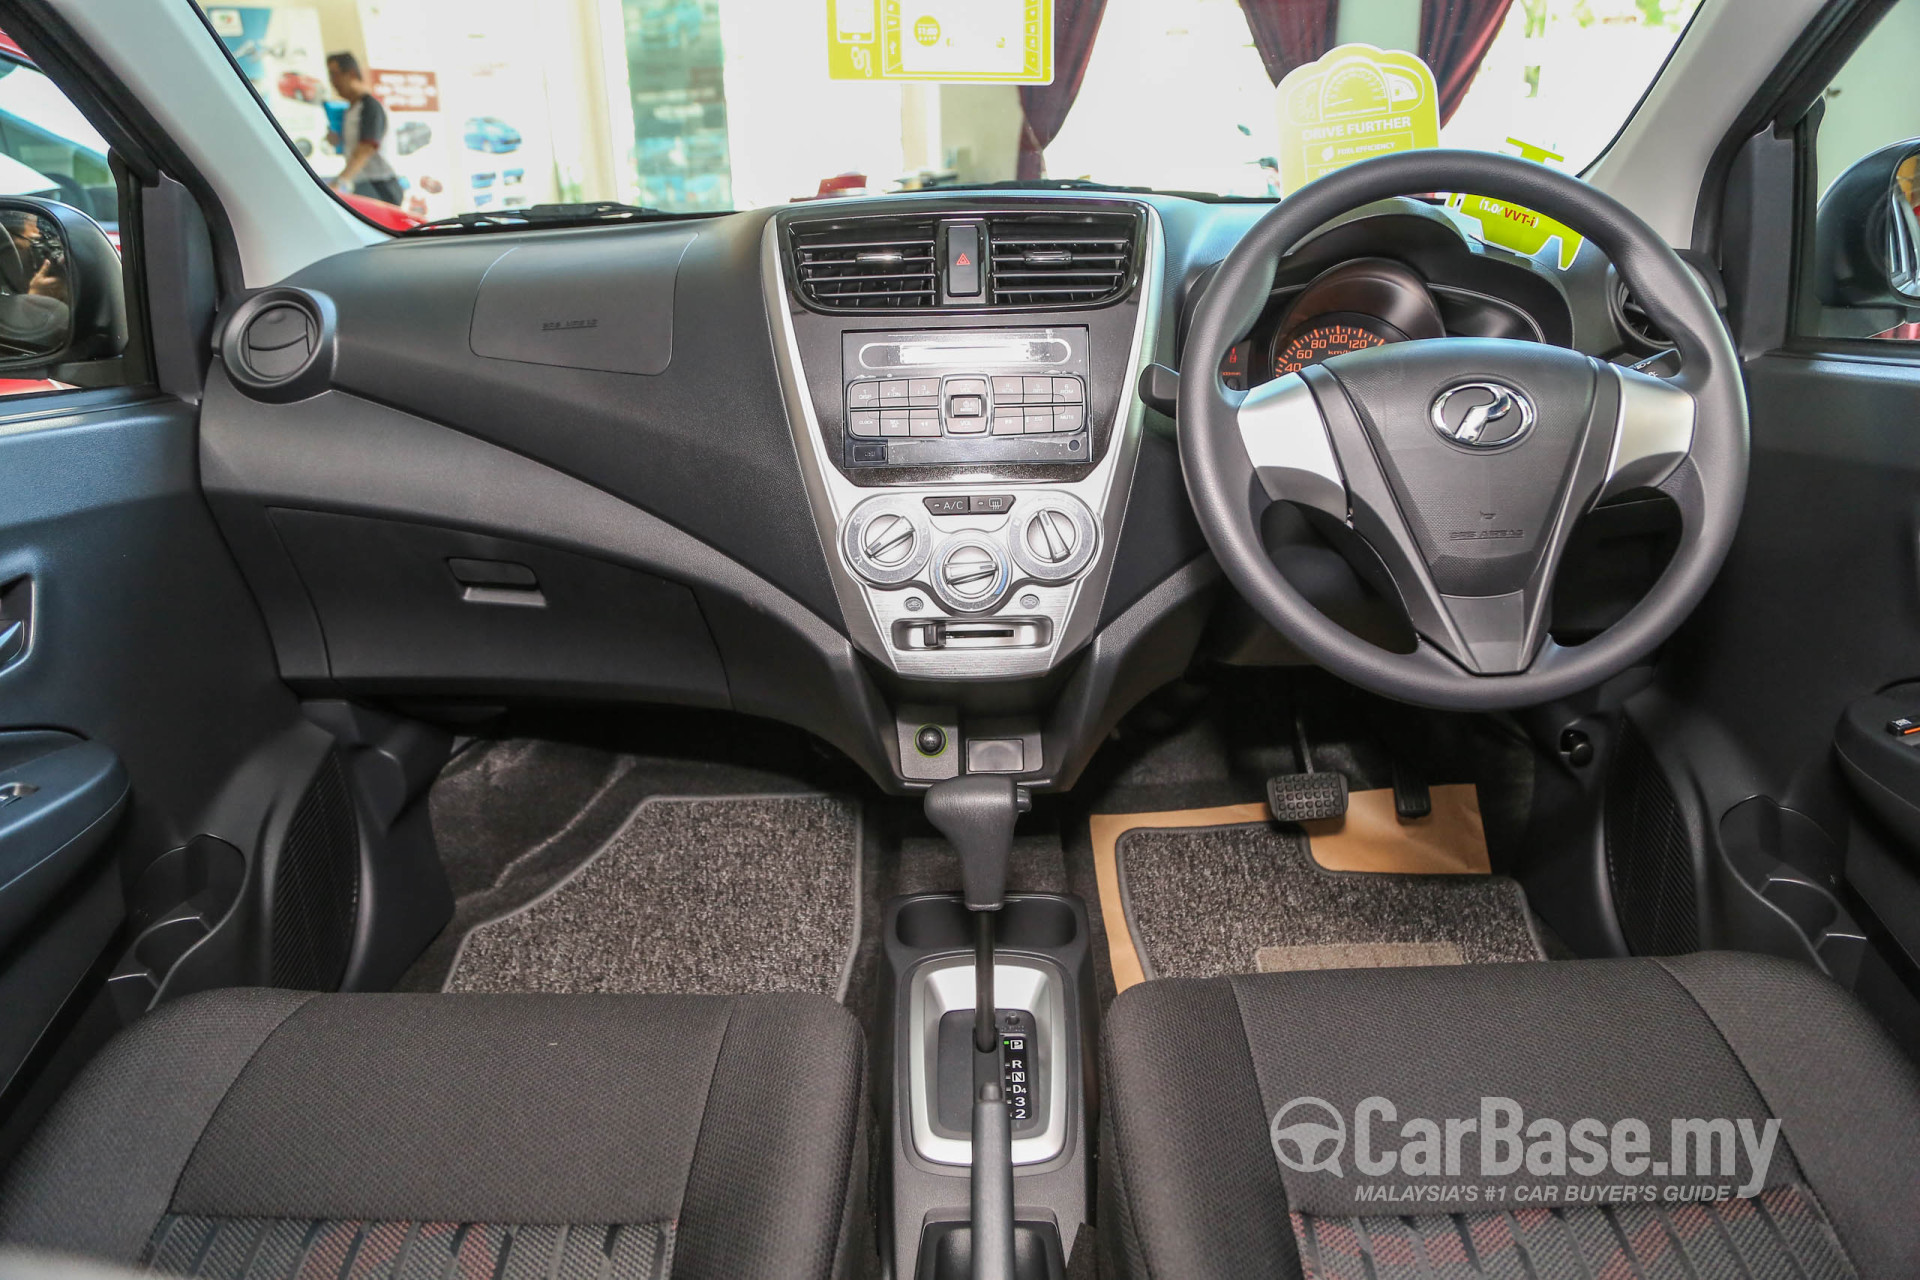 Perodua Axia Mk1 Facelift (2017) Interior Image #35109 in 